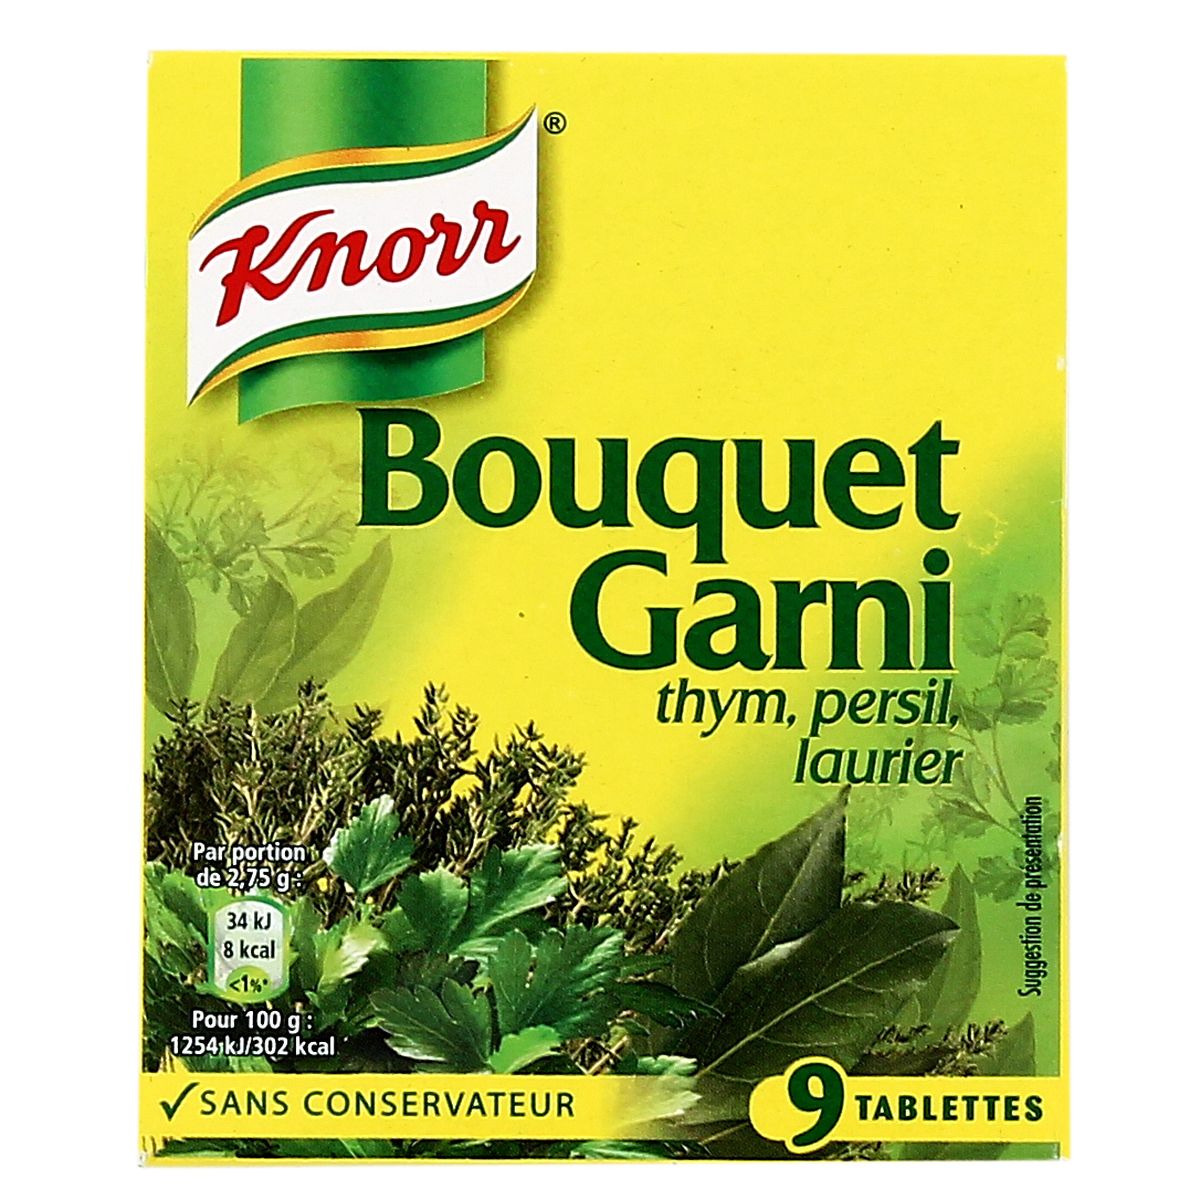 Bouquet garni: Acheter, composition, usage, recette